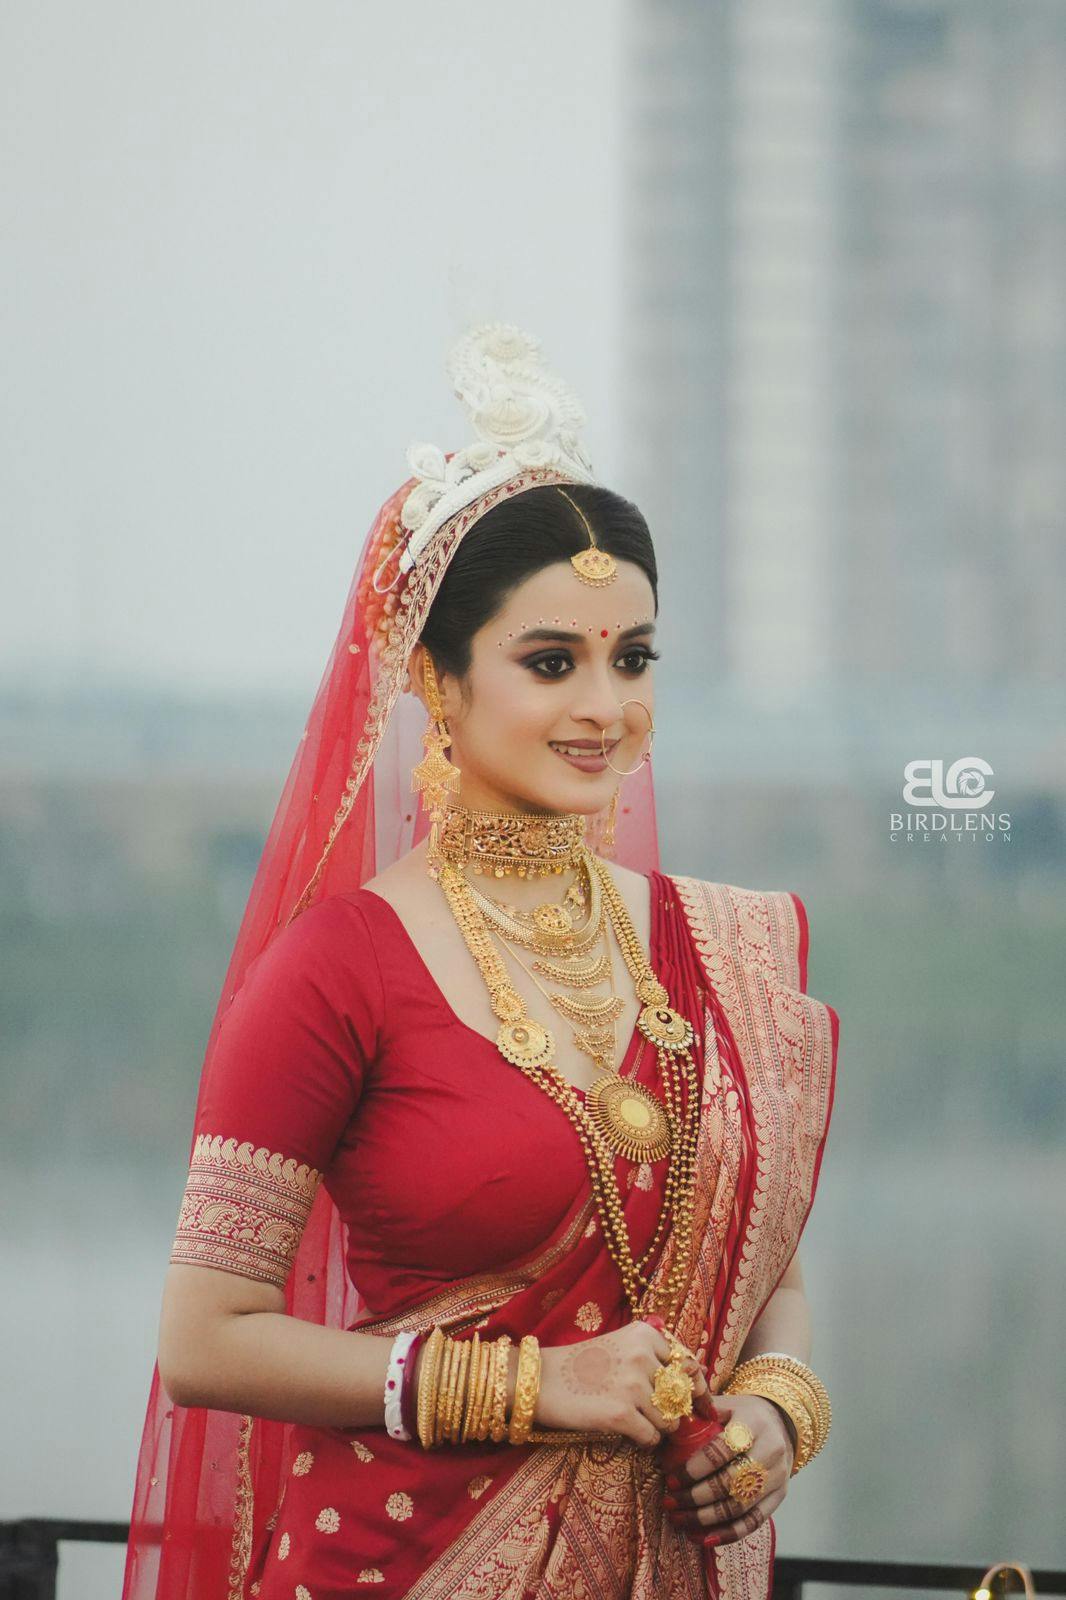 darshana banik wedding image with red saree image clicked by birdlens creation photography